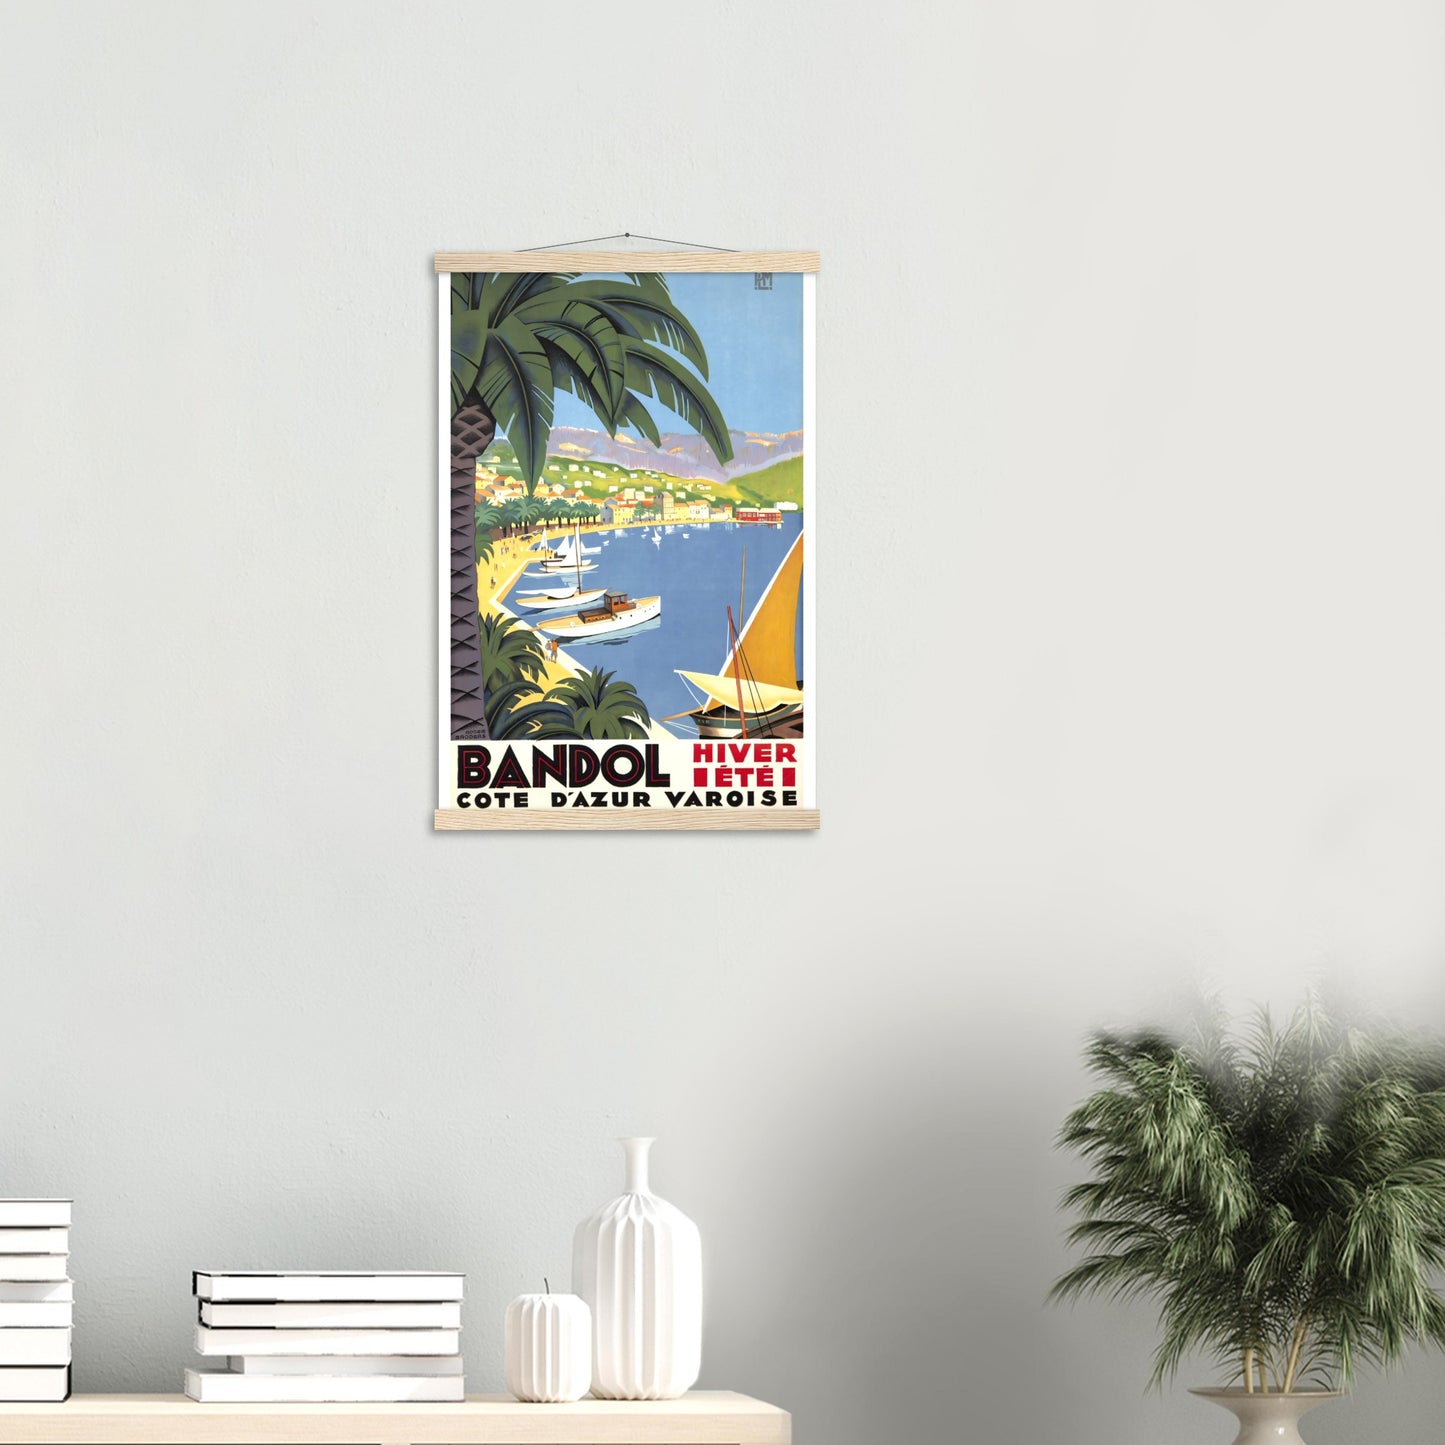 Bandol Vintage Poster Reprint on Premium Matte Paper - Posterify